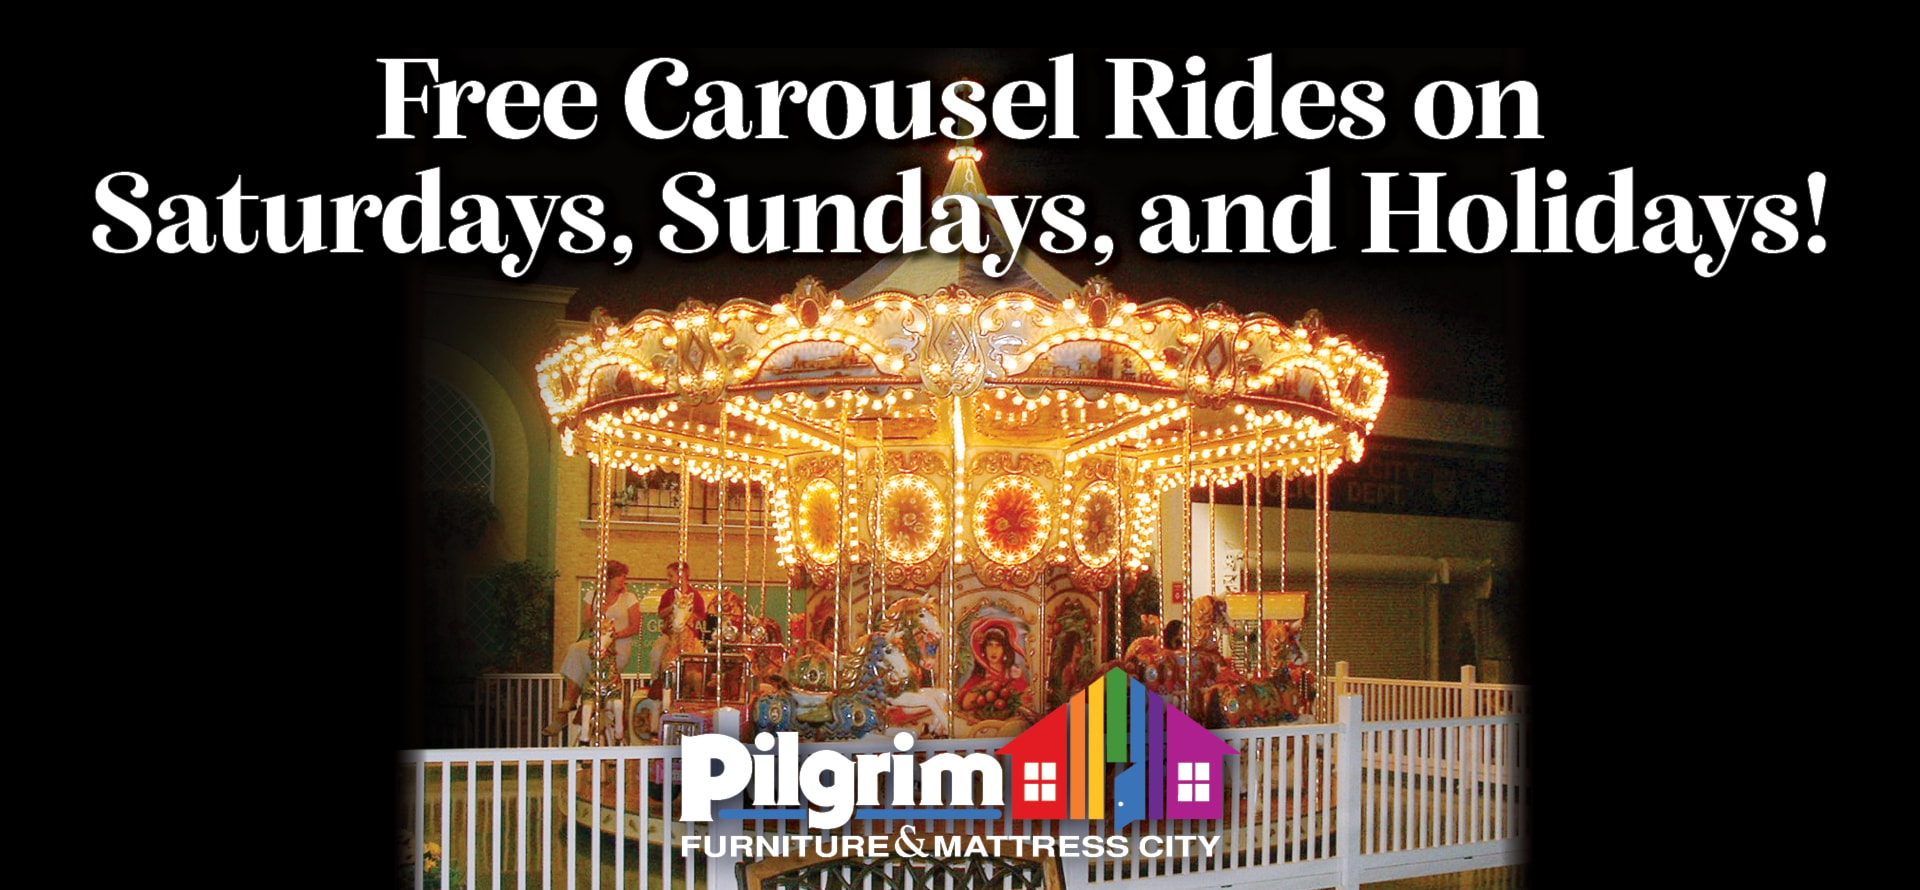 Free carousel Rides on Saturdays, Sundays, and Holidays!